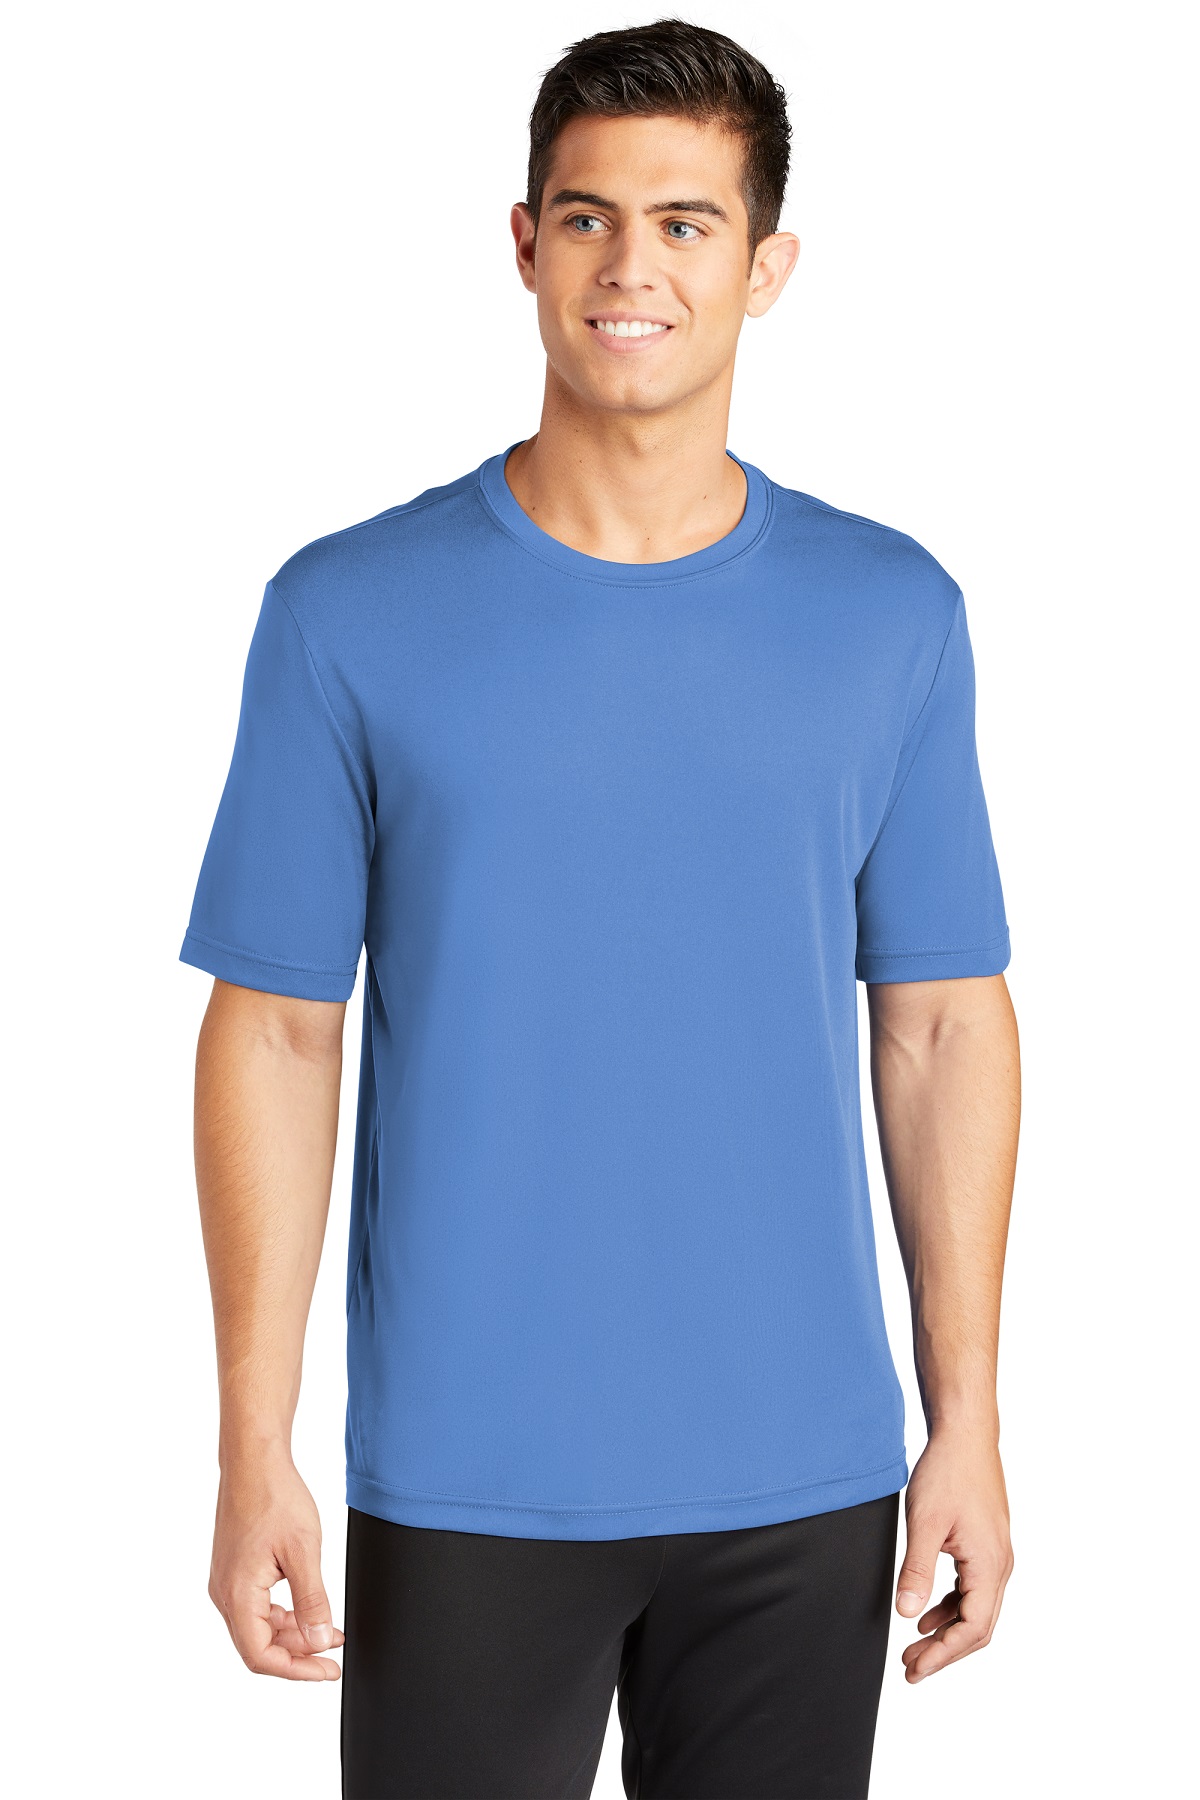 Sport-Tek Printed Men's Competitor Tee | T-Shirts - Queensboro